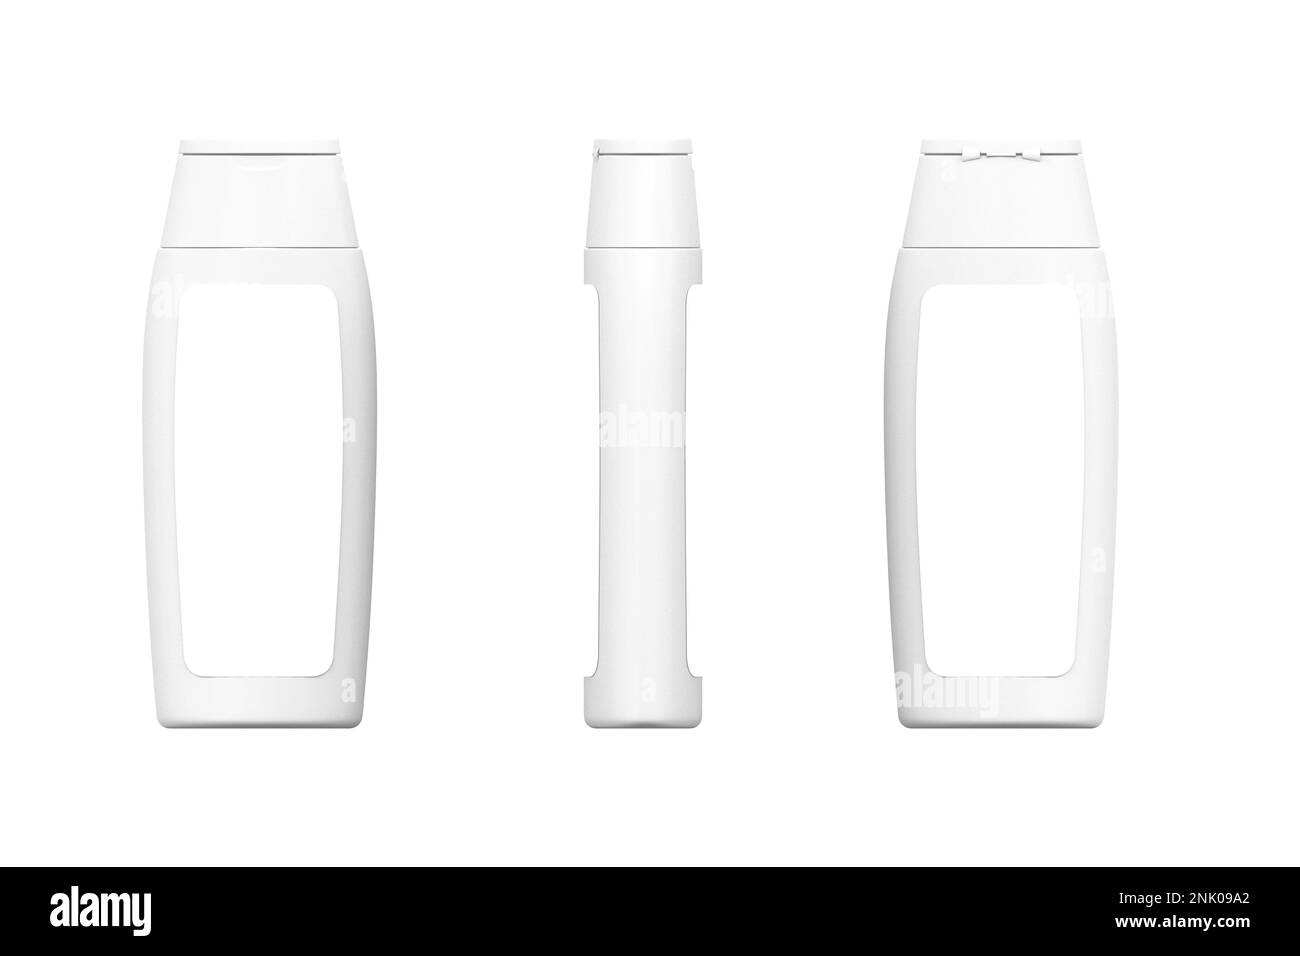 Lotionsflaschenmodell isoliert auf weiß - 3D-Rendering Stockfoto